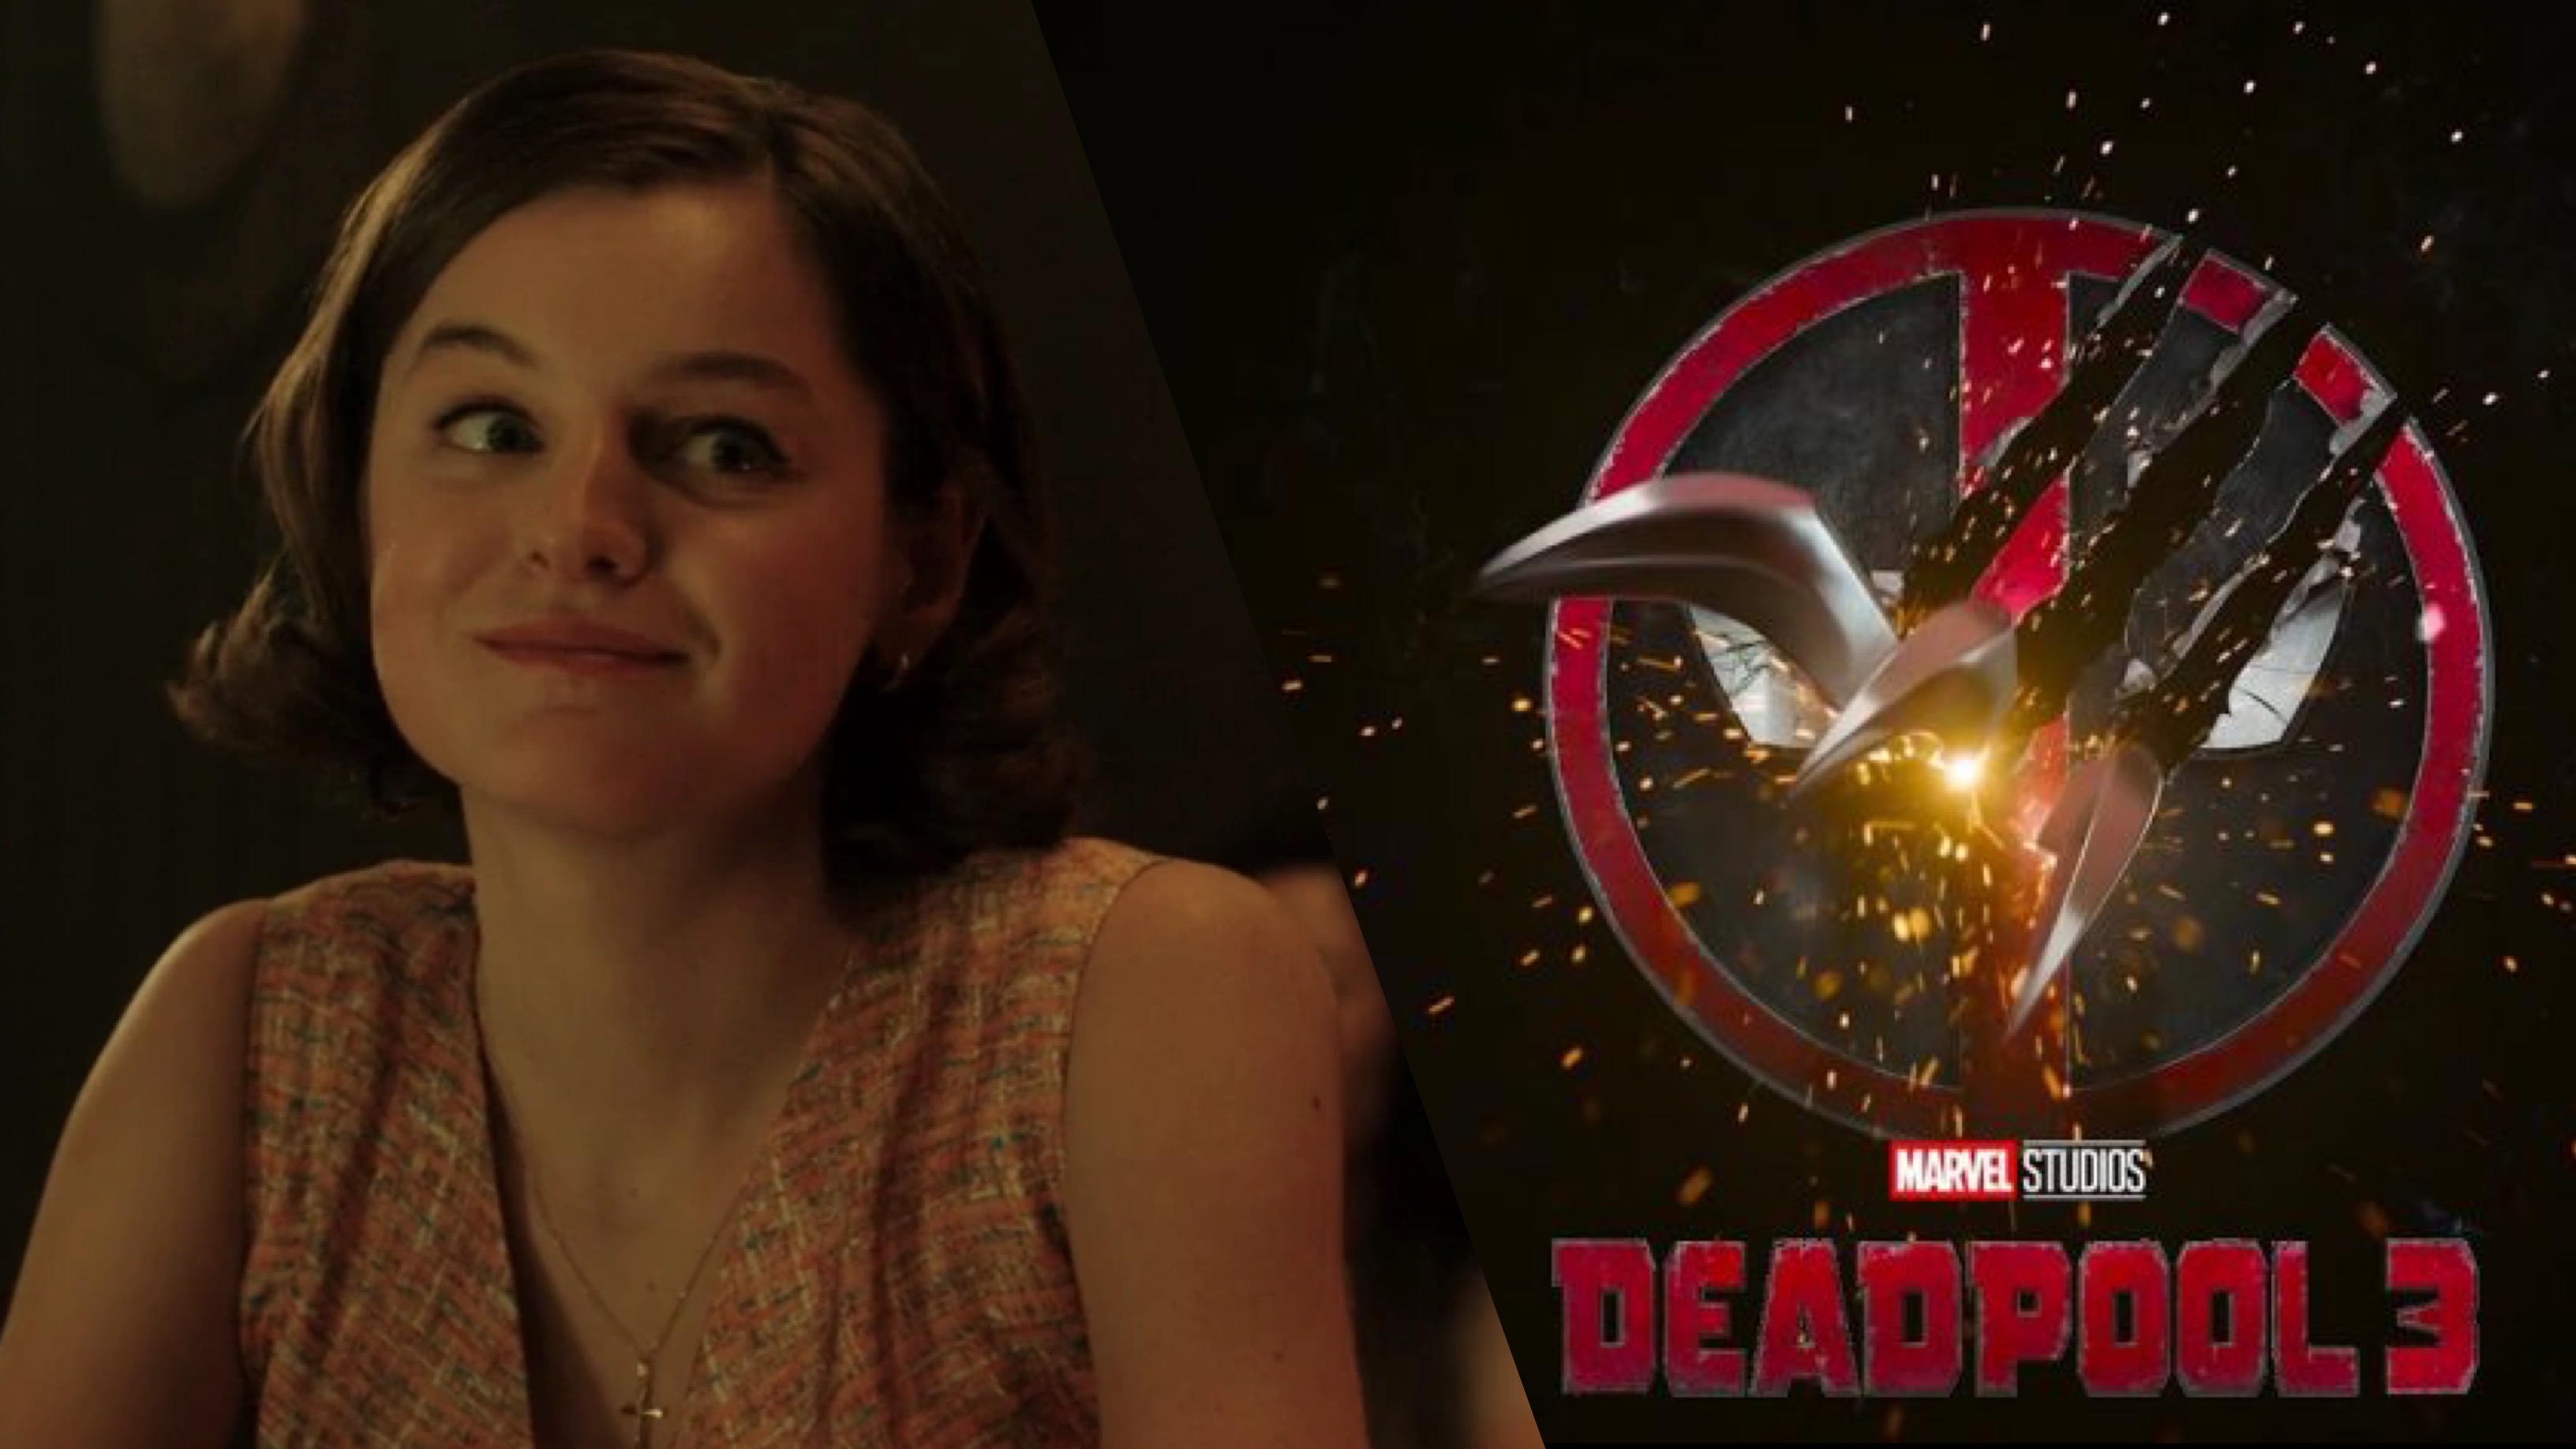 Emma Corrin Excited to Play ‘Deadpool 3’ Villain